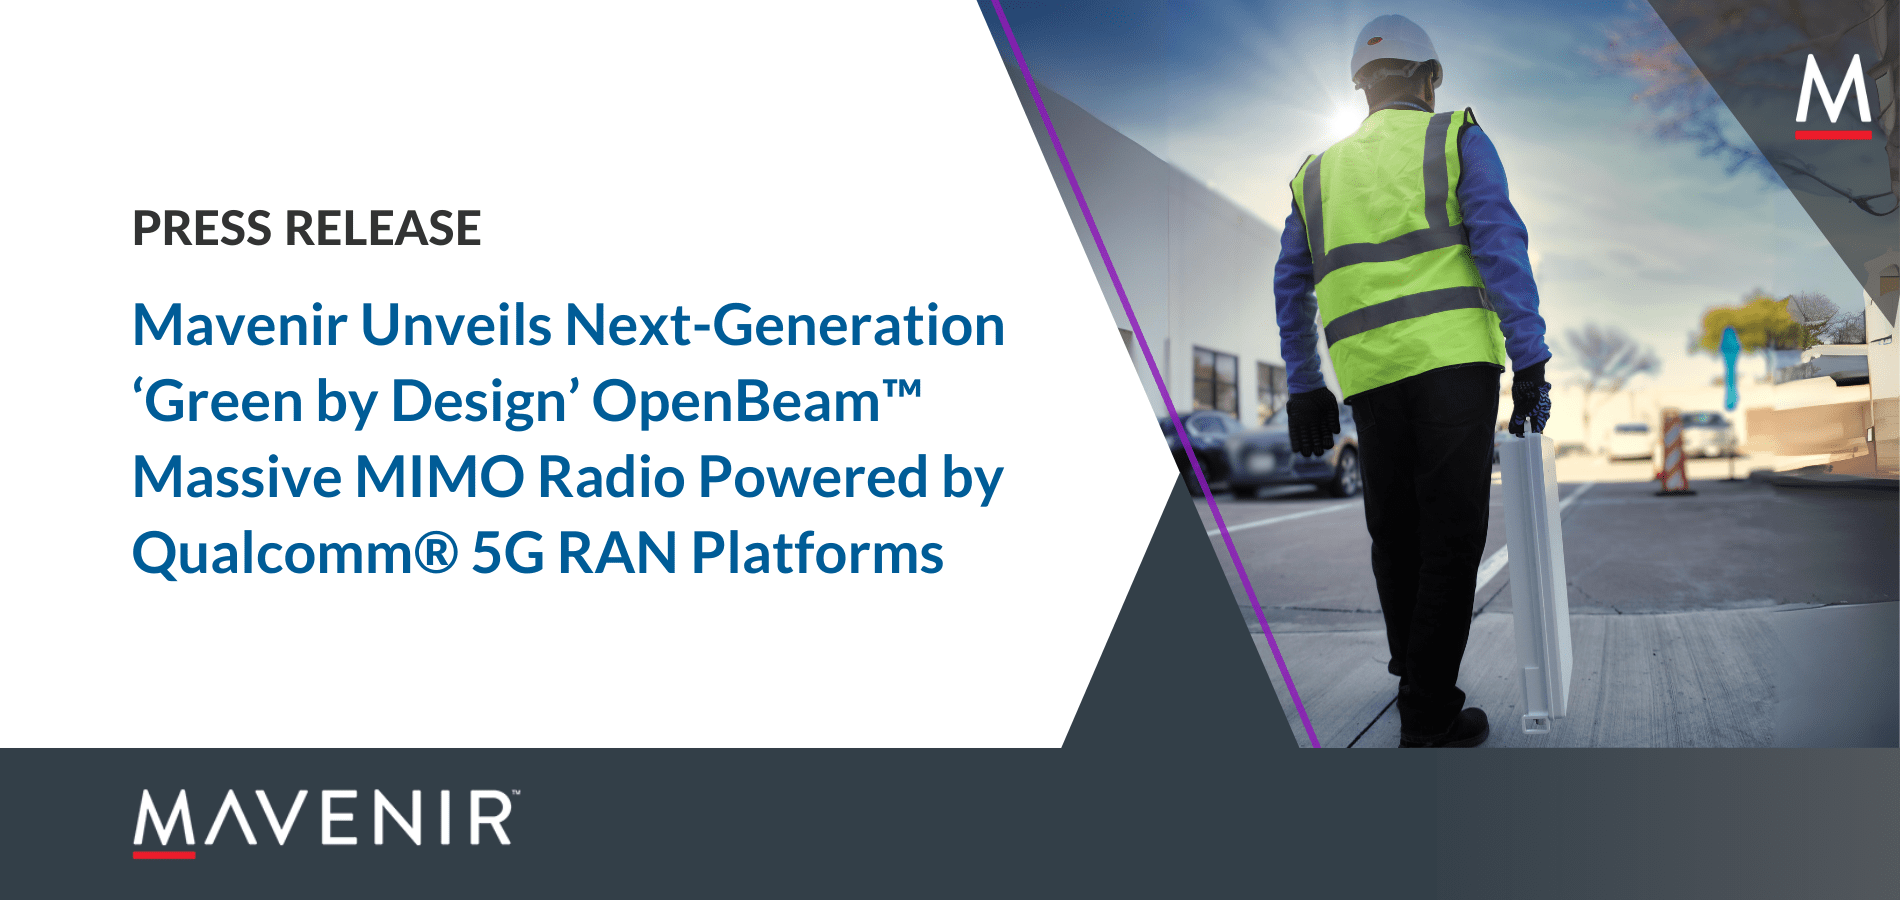 Mavenir Unveils Next-Generation ‘Green by Design’ OpenBeam™ Massive MIMO Radio Powered by Qualcomm® 5G RAN Platforms